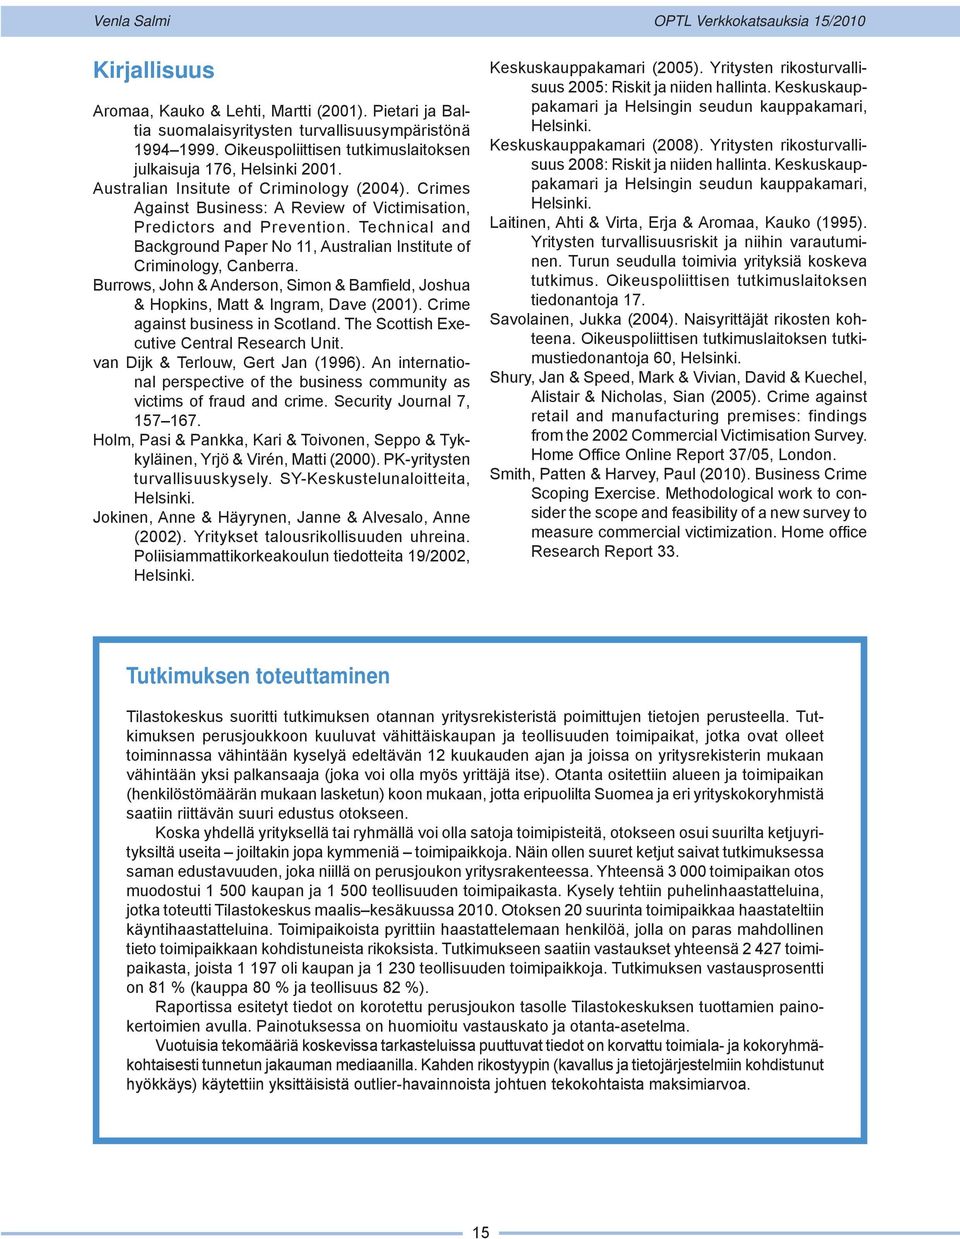 Technical and Background Paper No, Australian Institute of Criminology, Canberra. Burrows, John & Anderson, Simon & Bamfield, Joshua & Hopkins, Matt & Ingram, Dave (00).